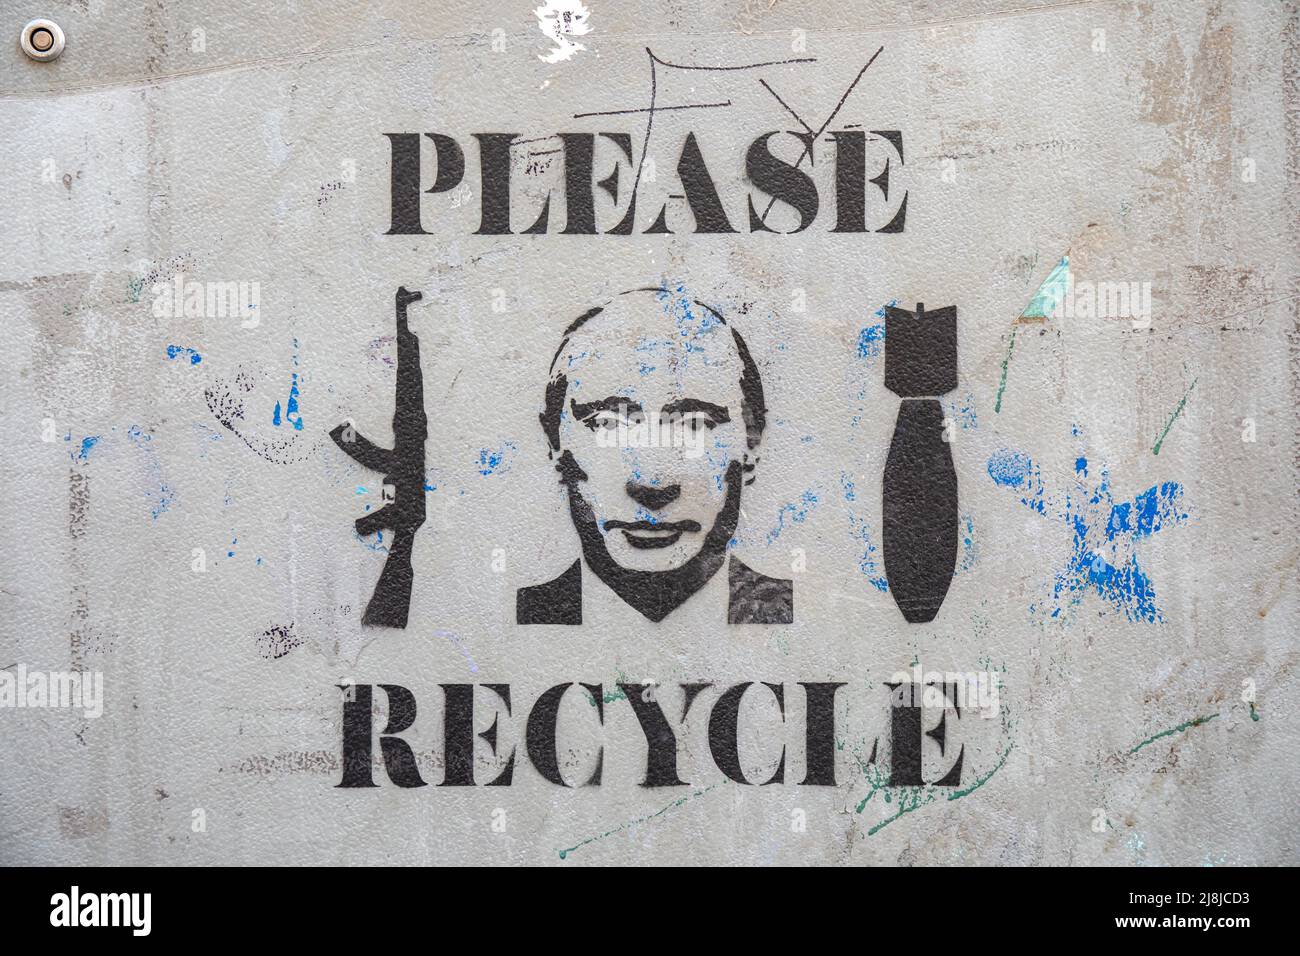 Please recycle. Anti-Putin stencil graffiti by Plan B. Street art. Stock Photo